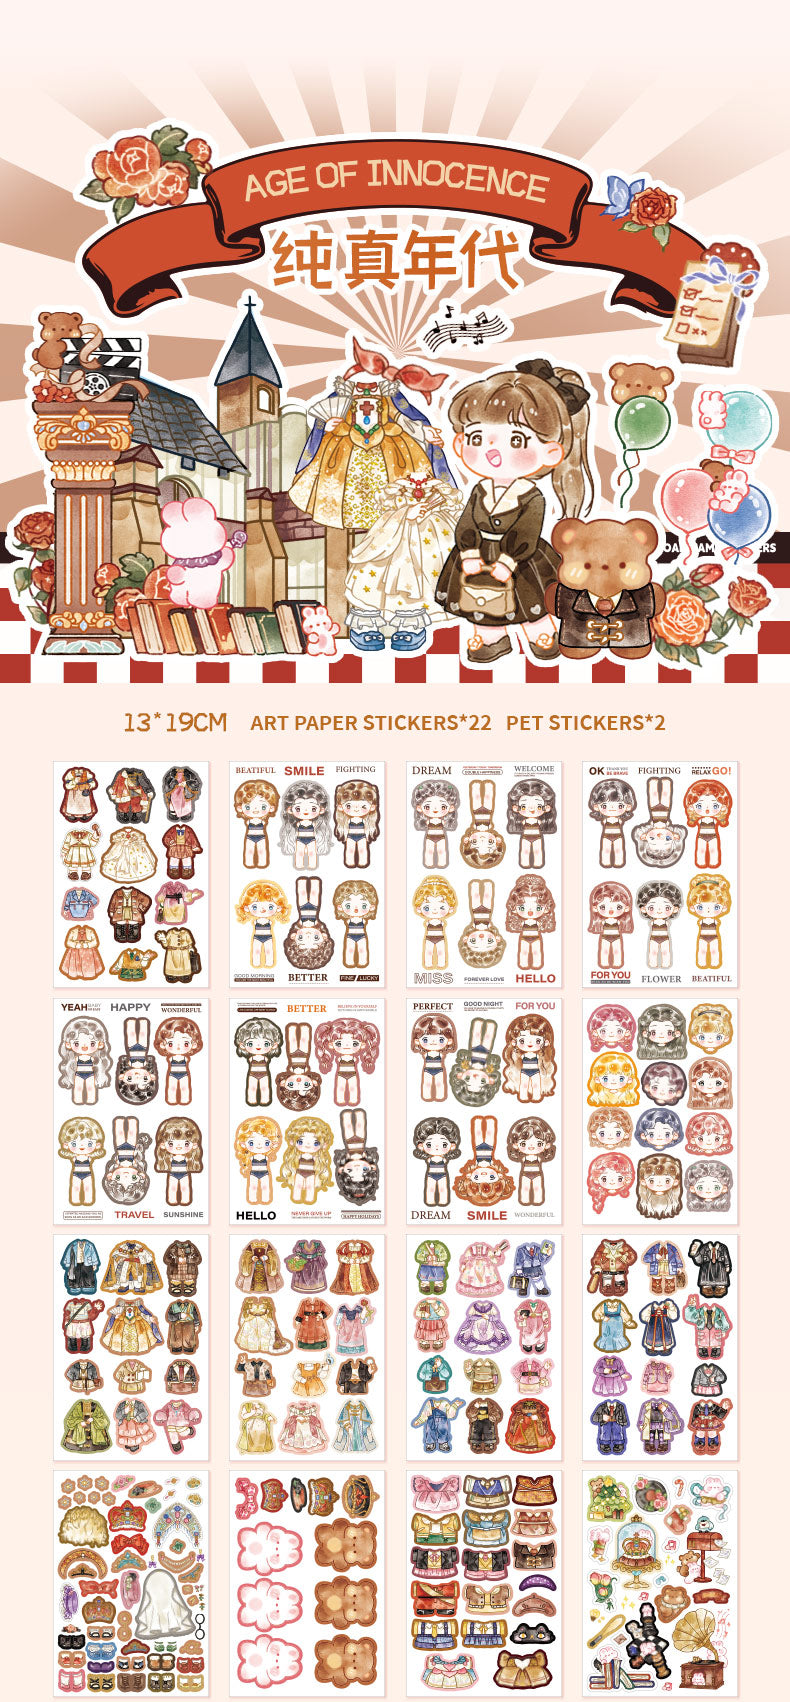 Stickers mini princesas shanshan-24 pzas